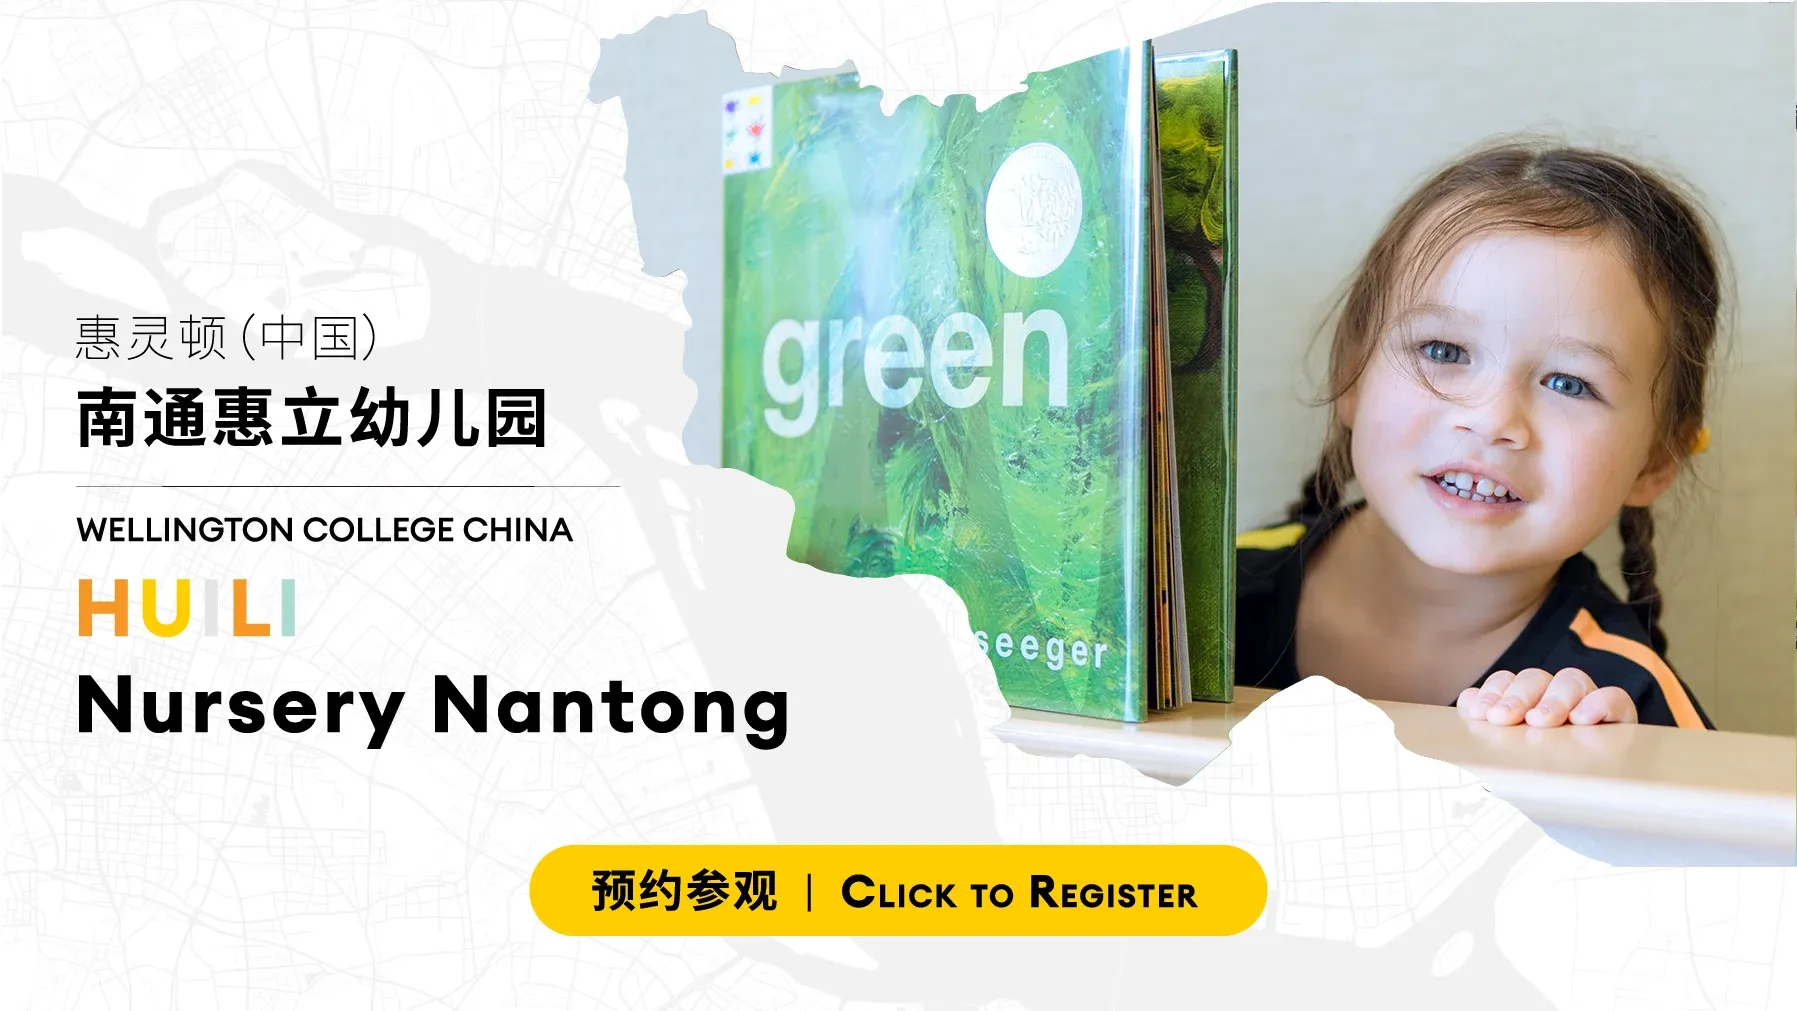 Make an appointment to visit Nantong International Kindergarten